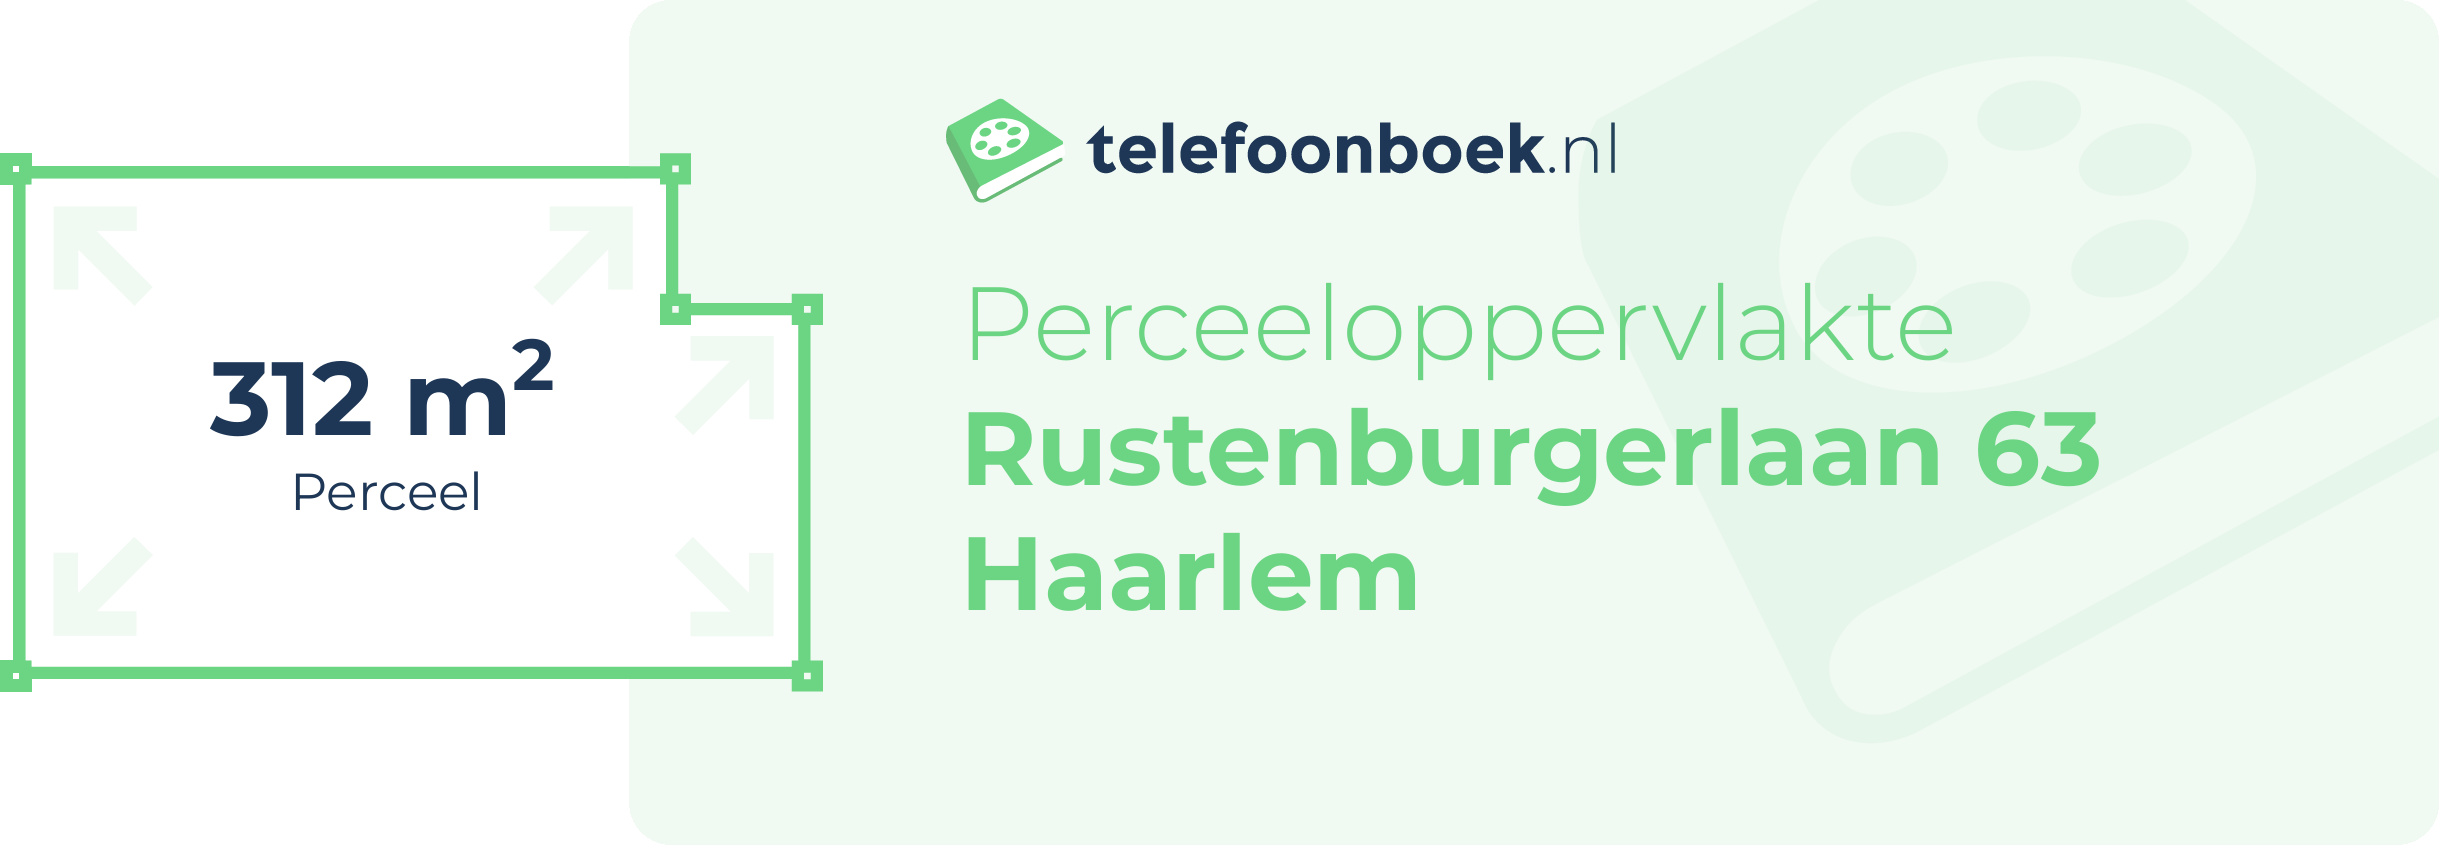 Perceeloppervlakte Rustenburgerlaan 63 Haarlem